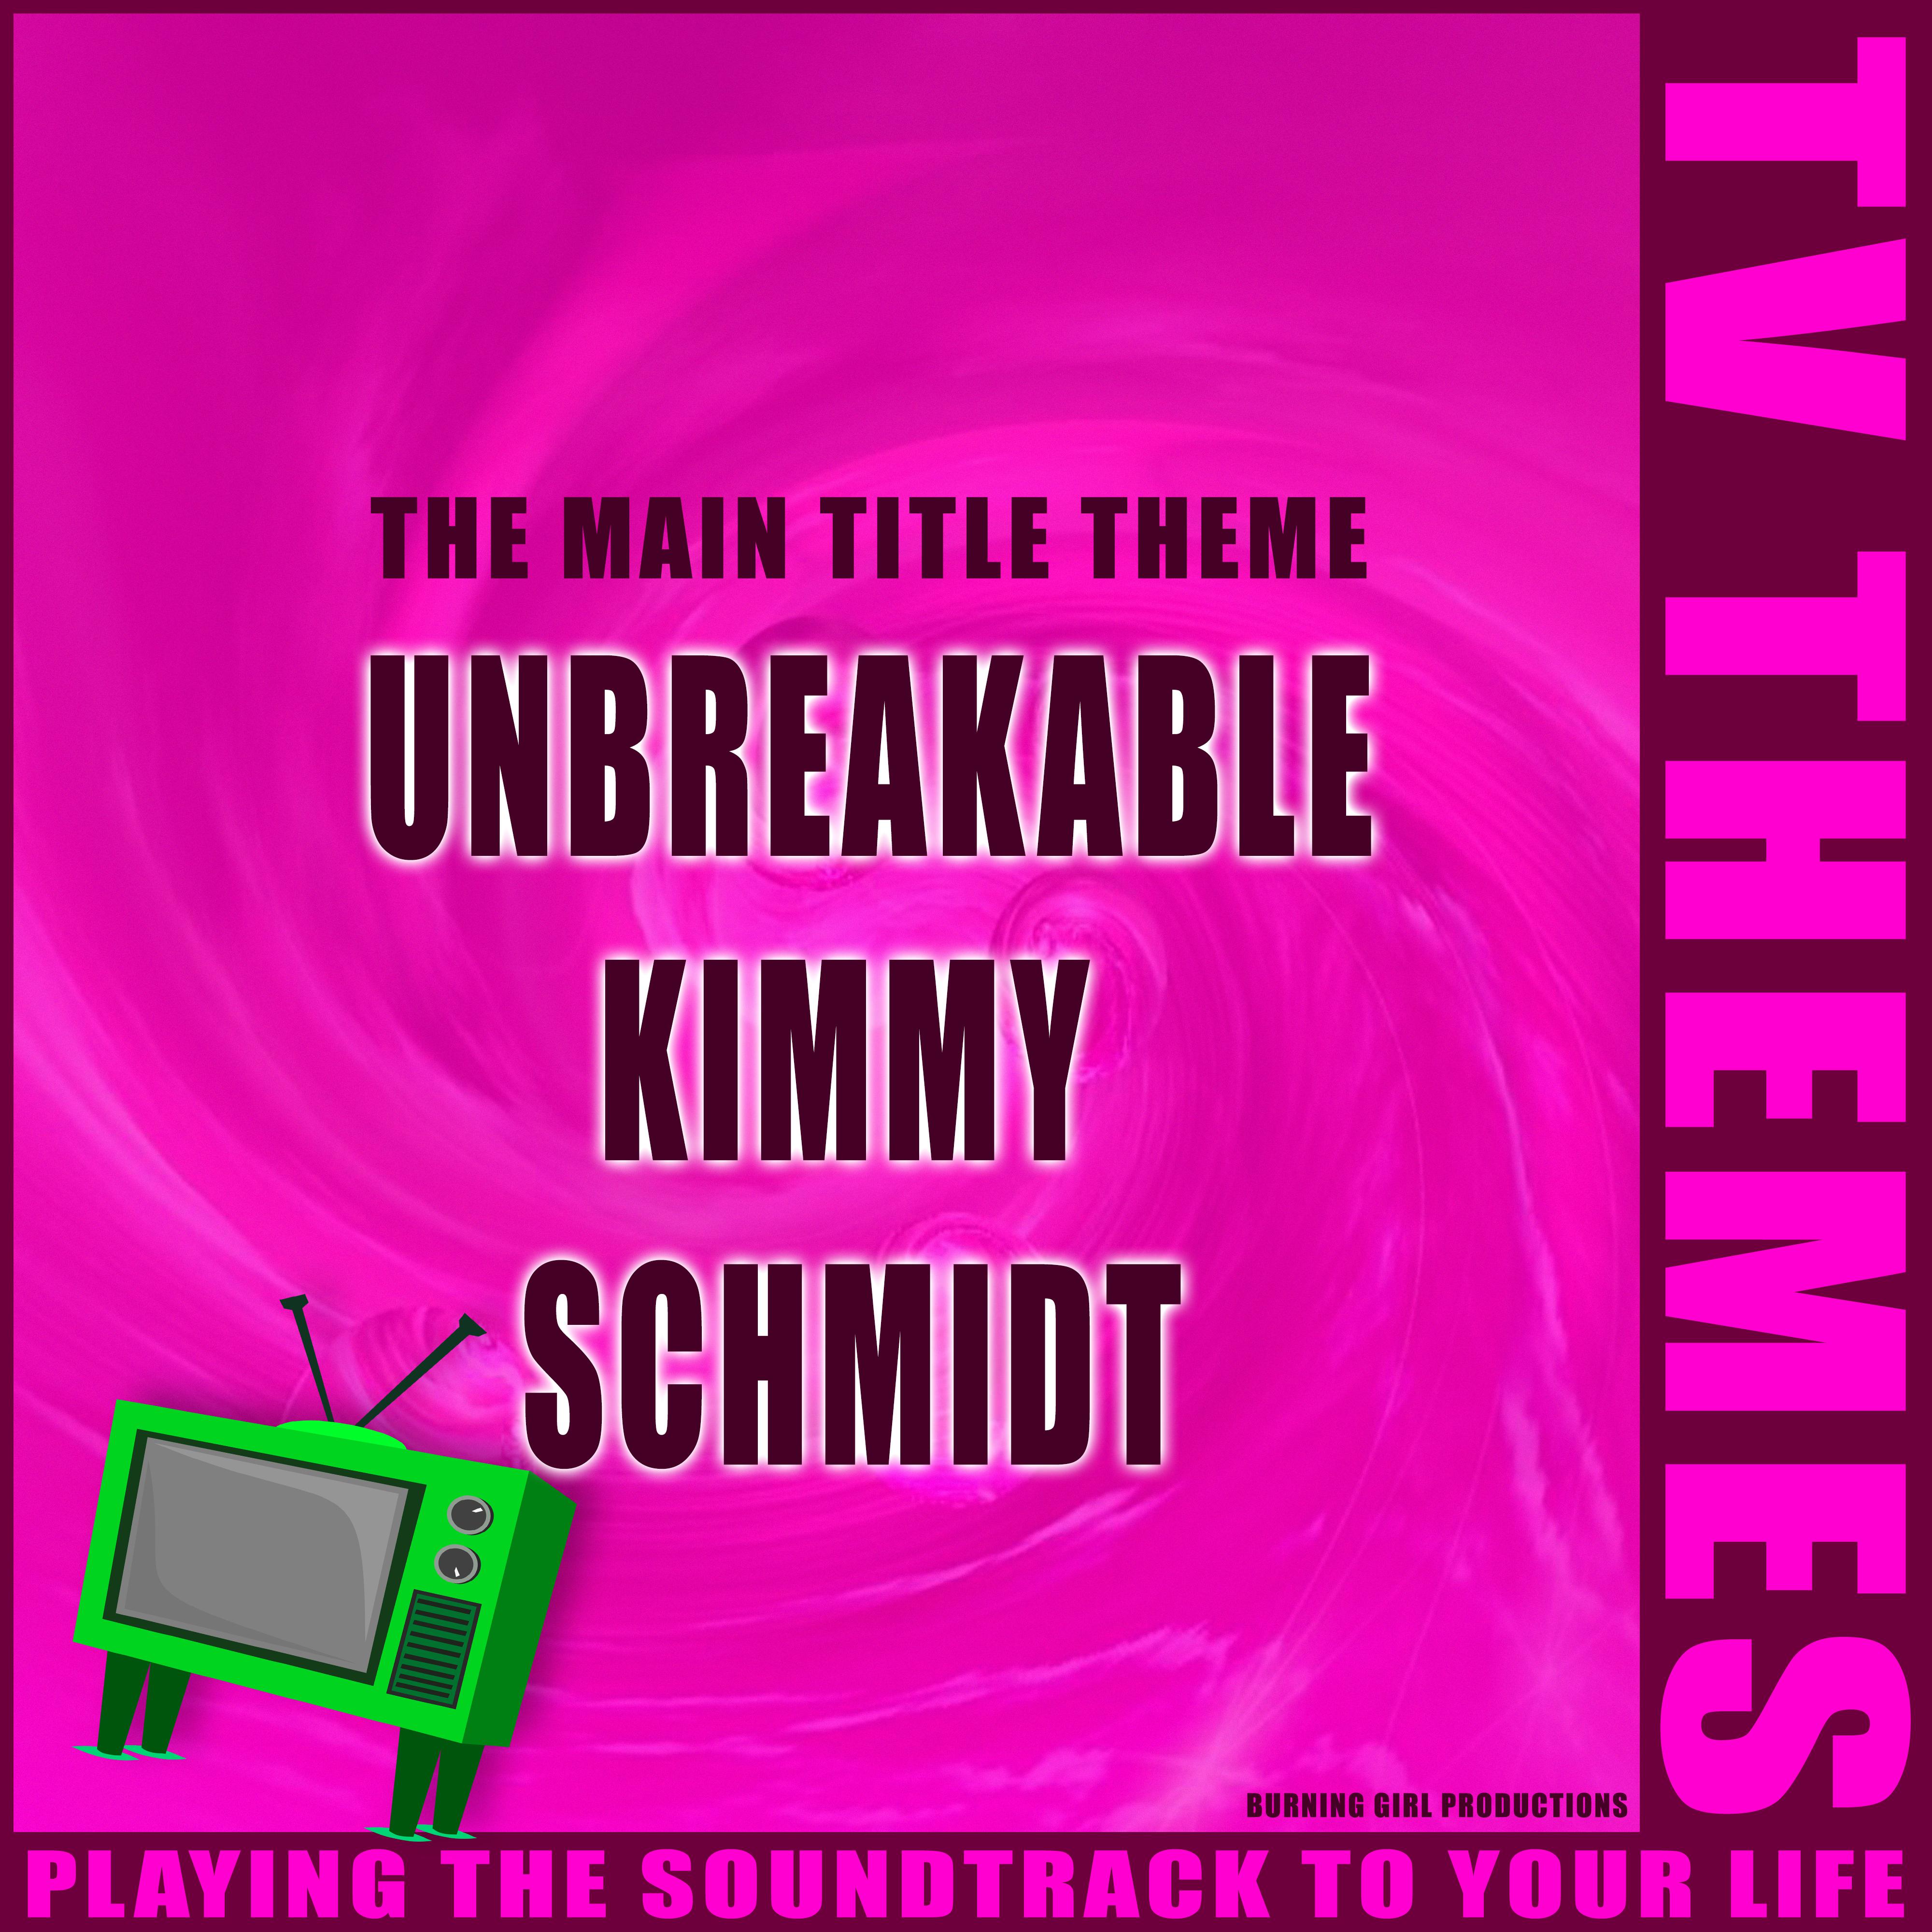 The Main Title Theme - Unbreakable Kimmy Schmidt